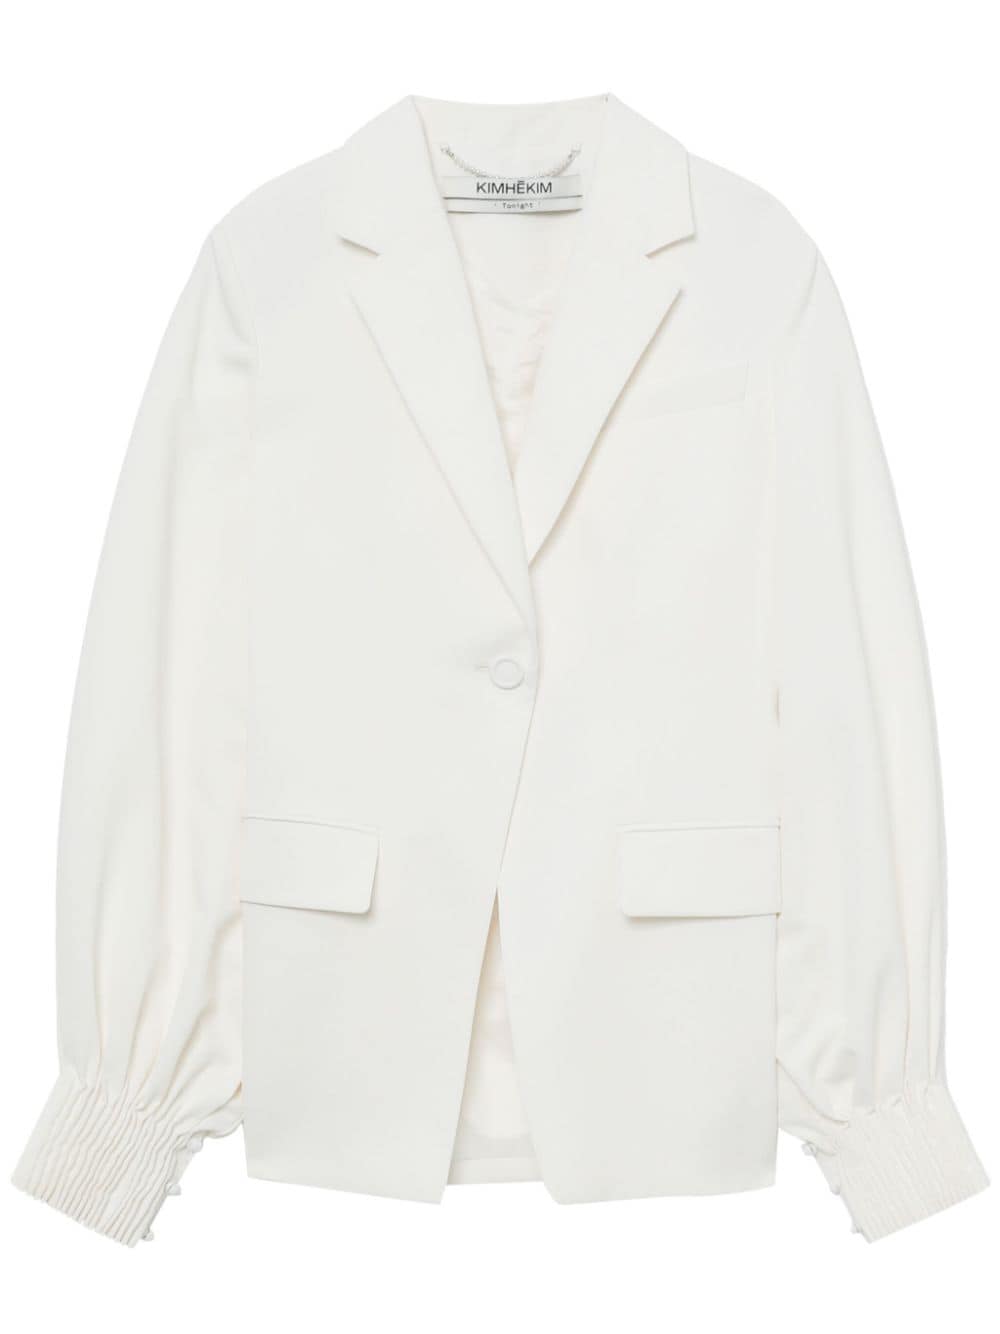 Kimhekim single-button gathered-sleeve jacket - White von Kimhekim